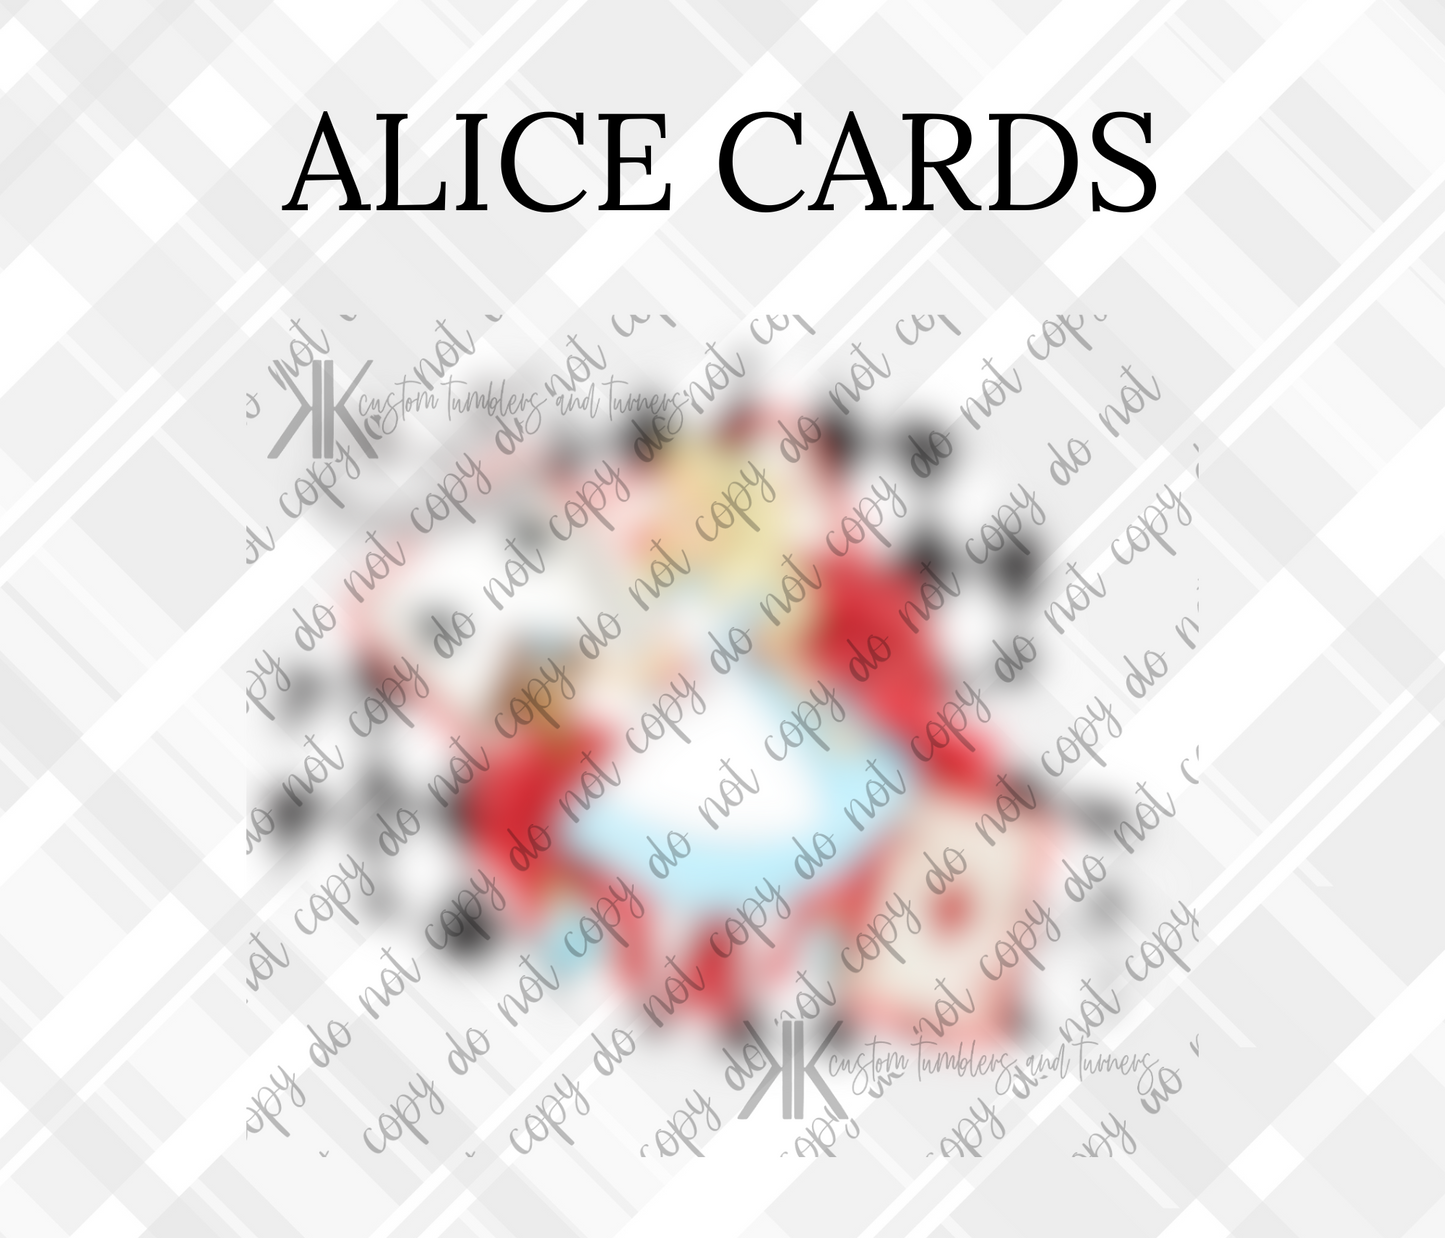 ALICE CARDS